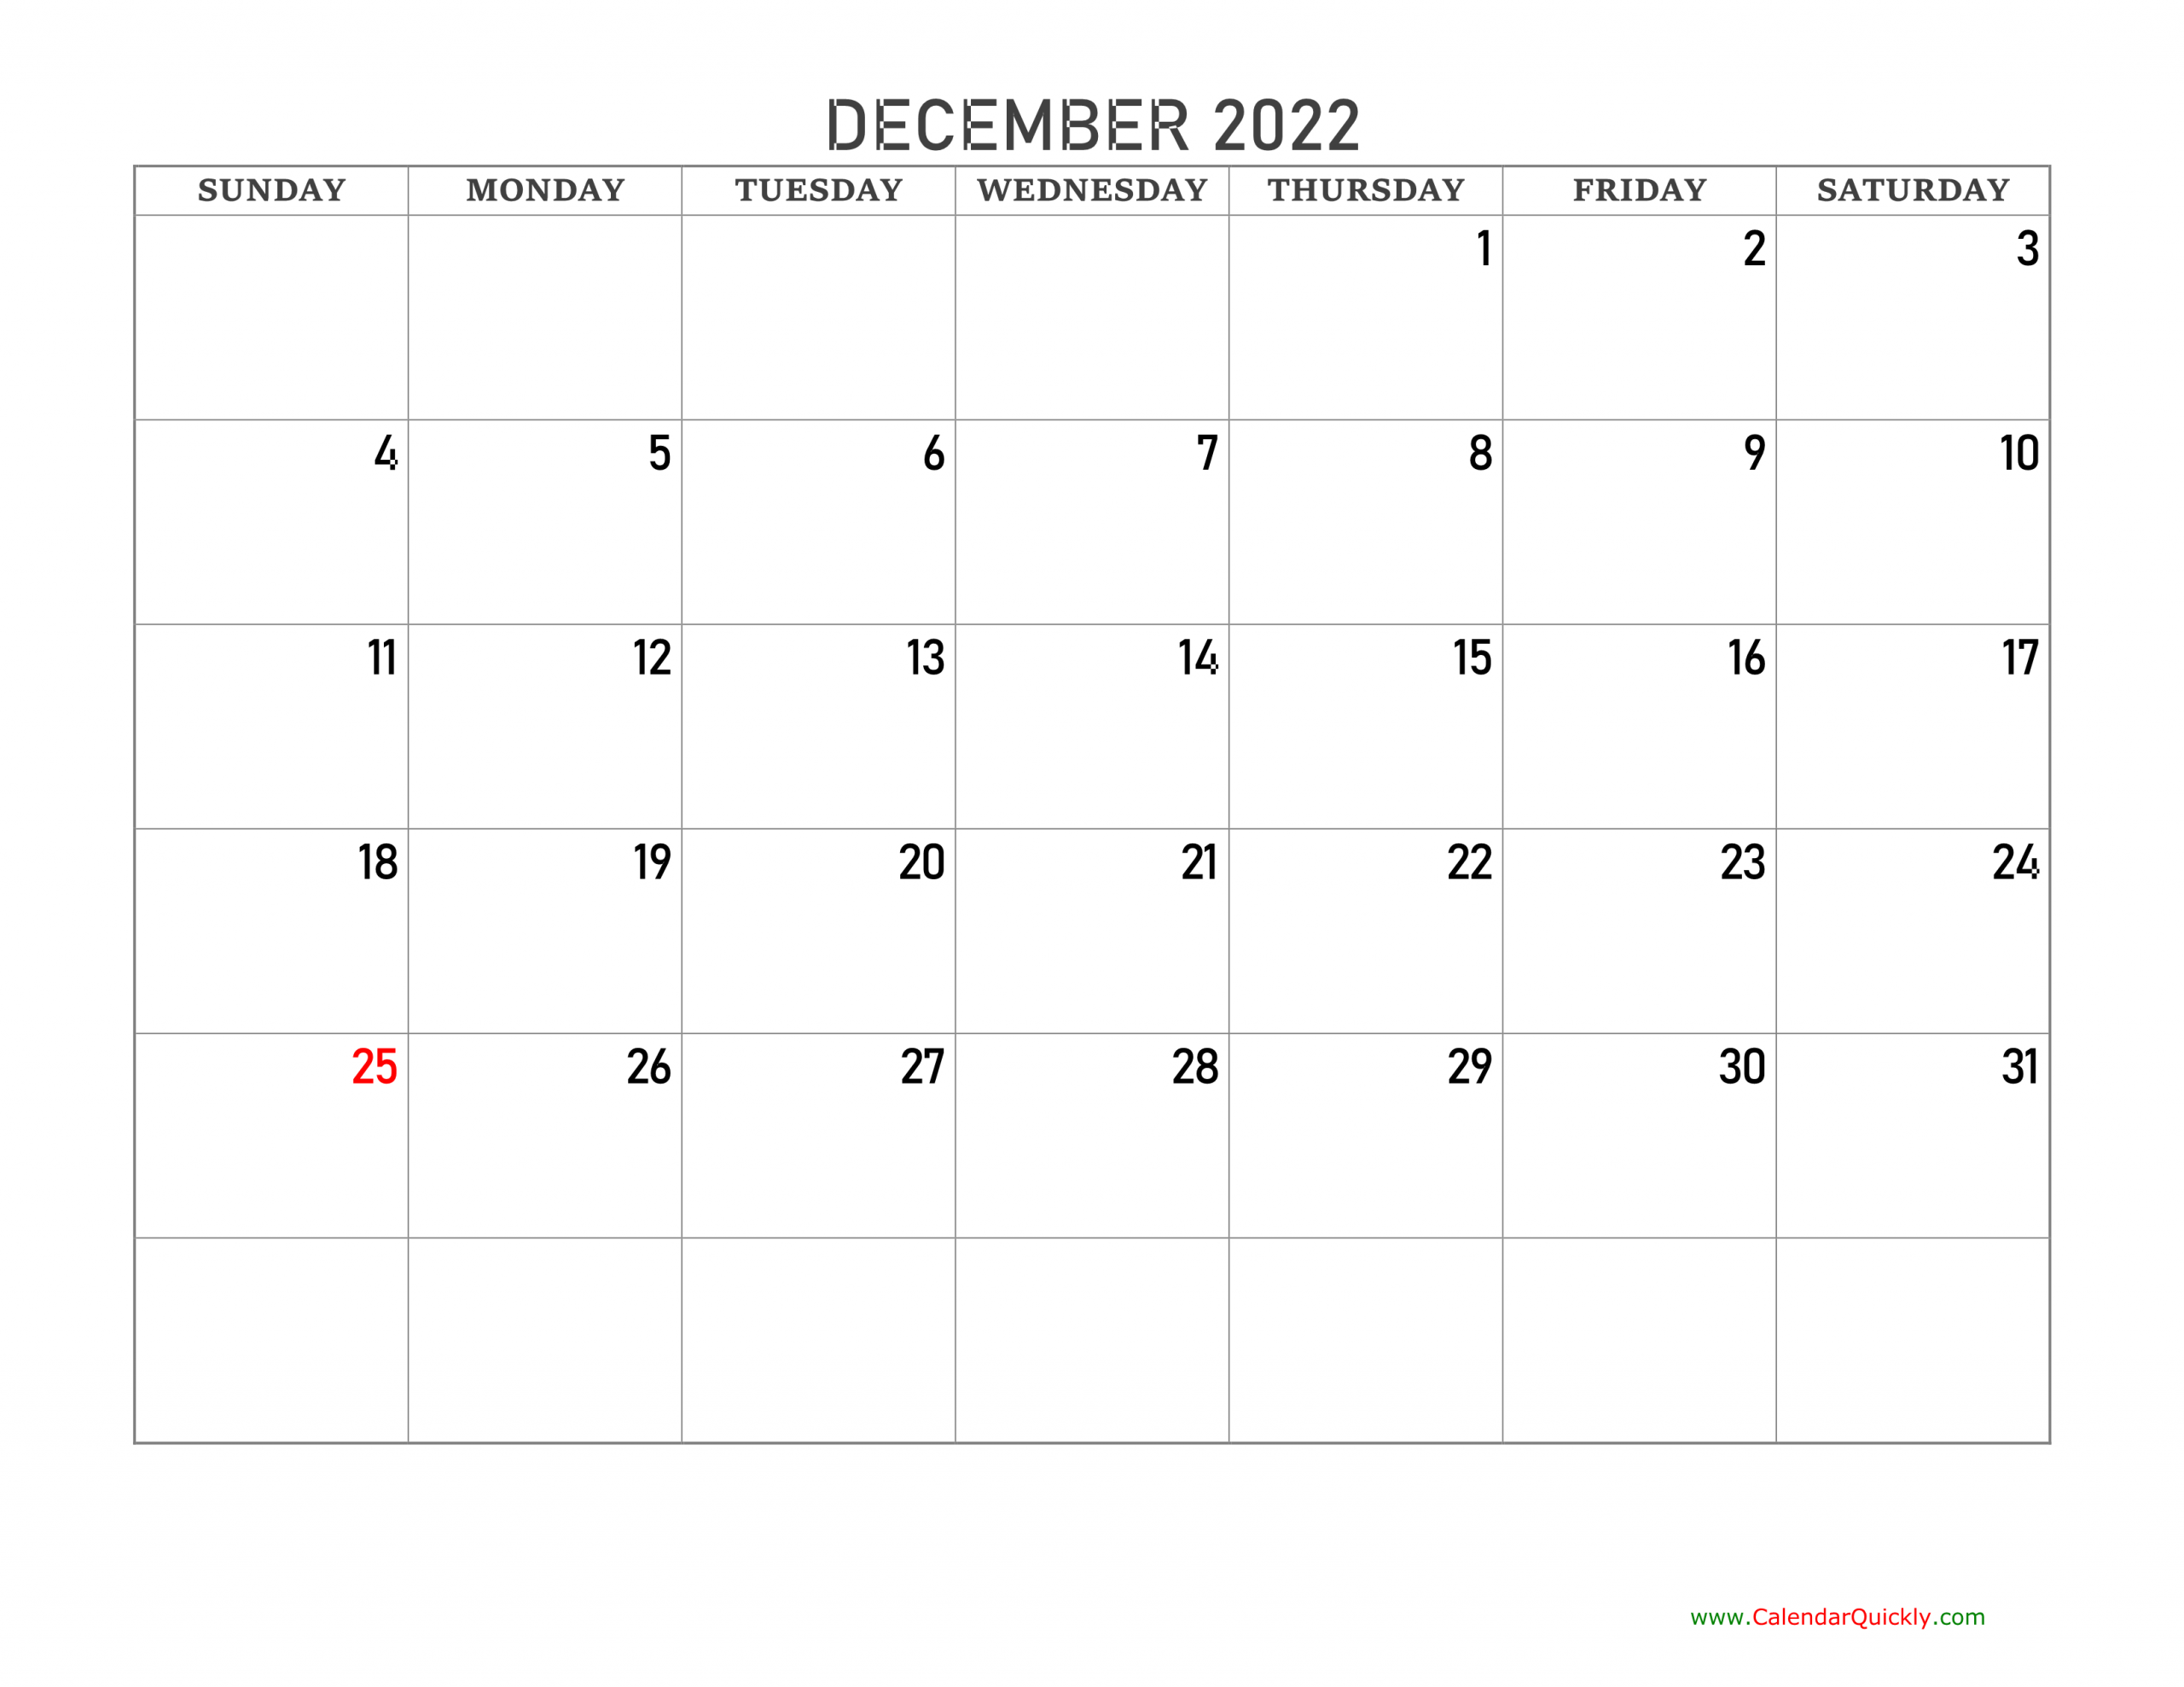 December 2022 Blank Calendar | Calendar Quickly